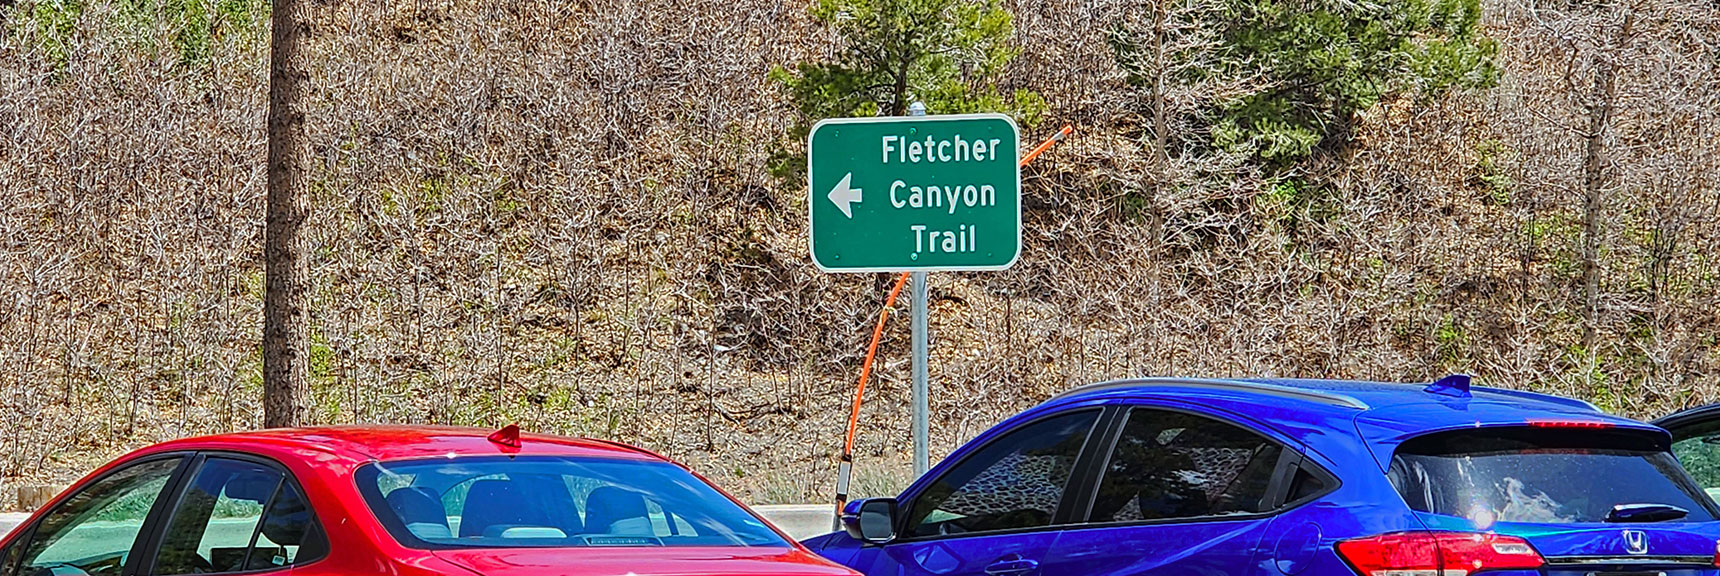 Fletcher Canyon Trail Begins Across Kyle Canyon Road from Trailhead Parking | Fletcher Canyon Trail | Mt Charleston Wilderness | Spring Mountains, Nevada